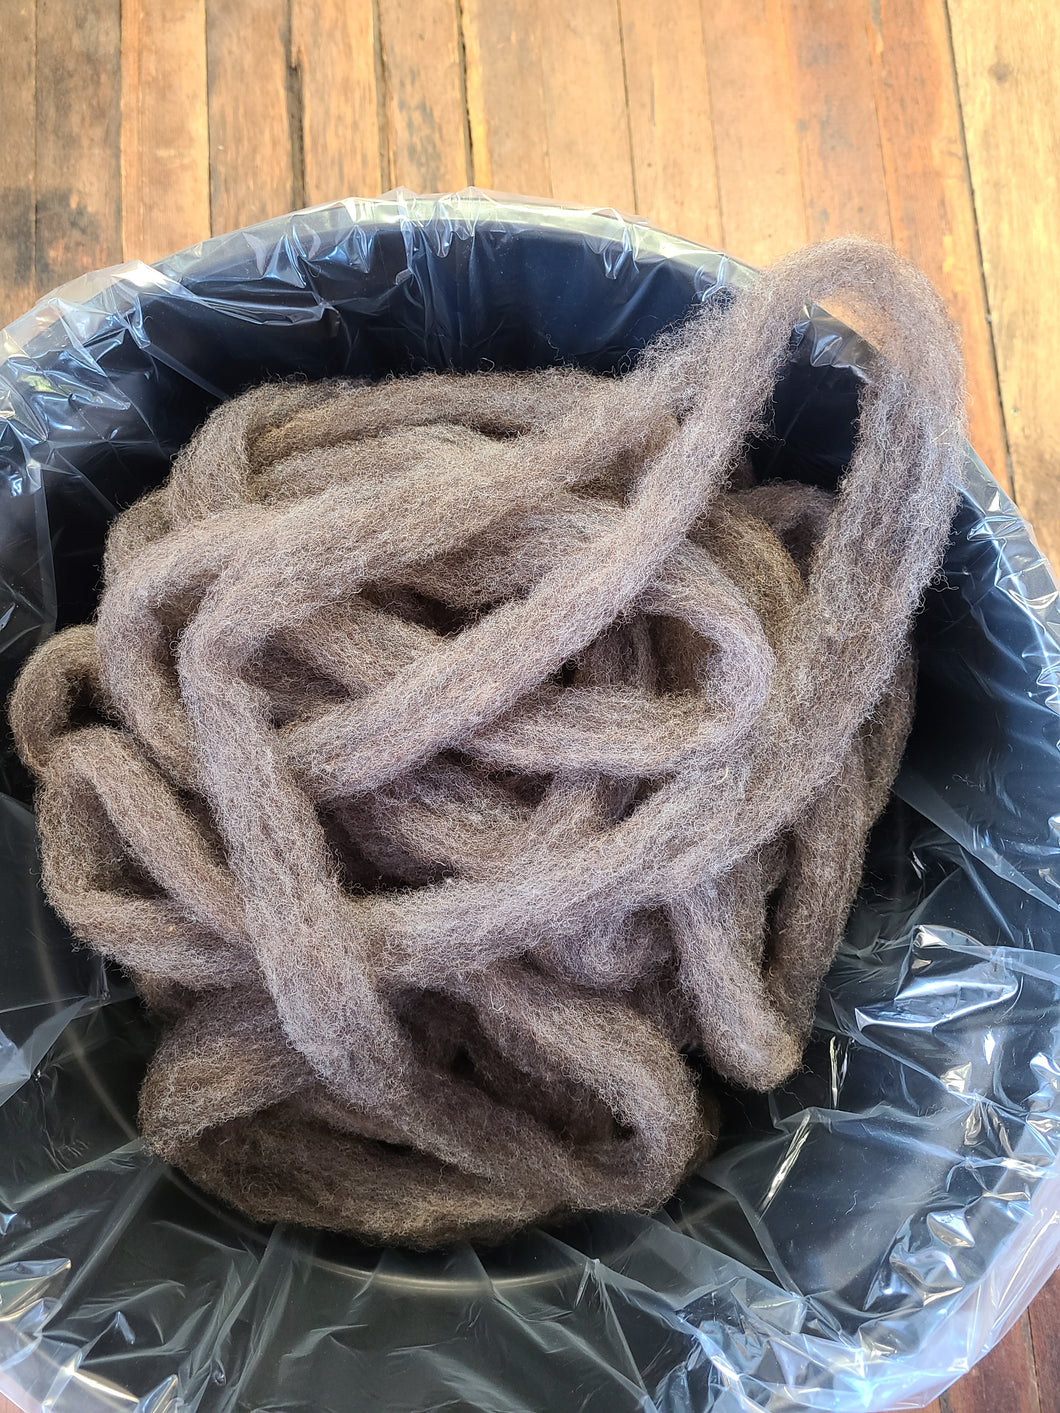 Jacob wool/alpaca blend roving - Whole fleece